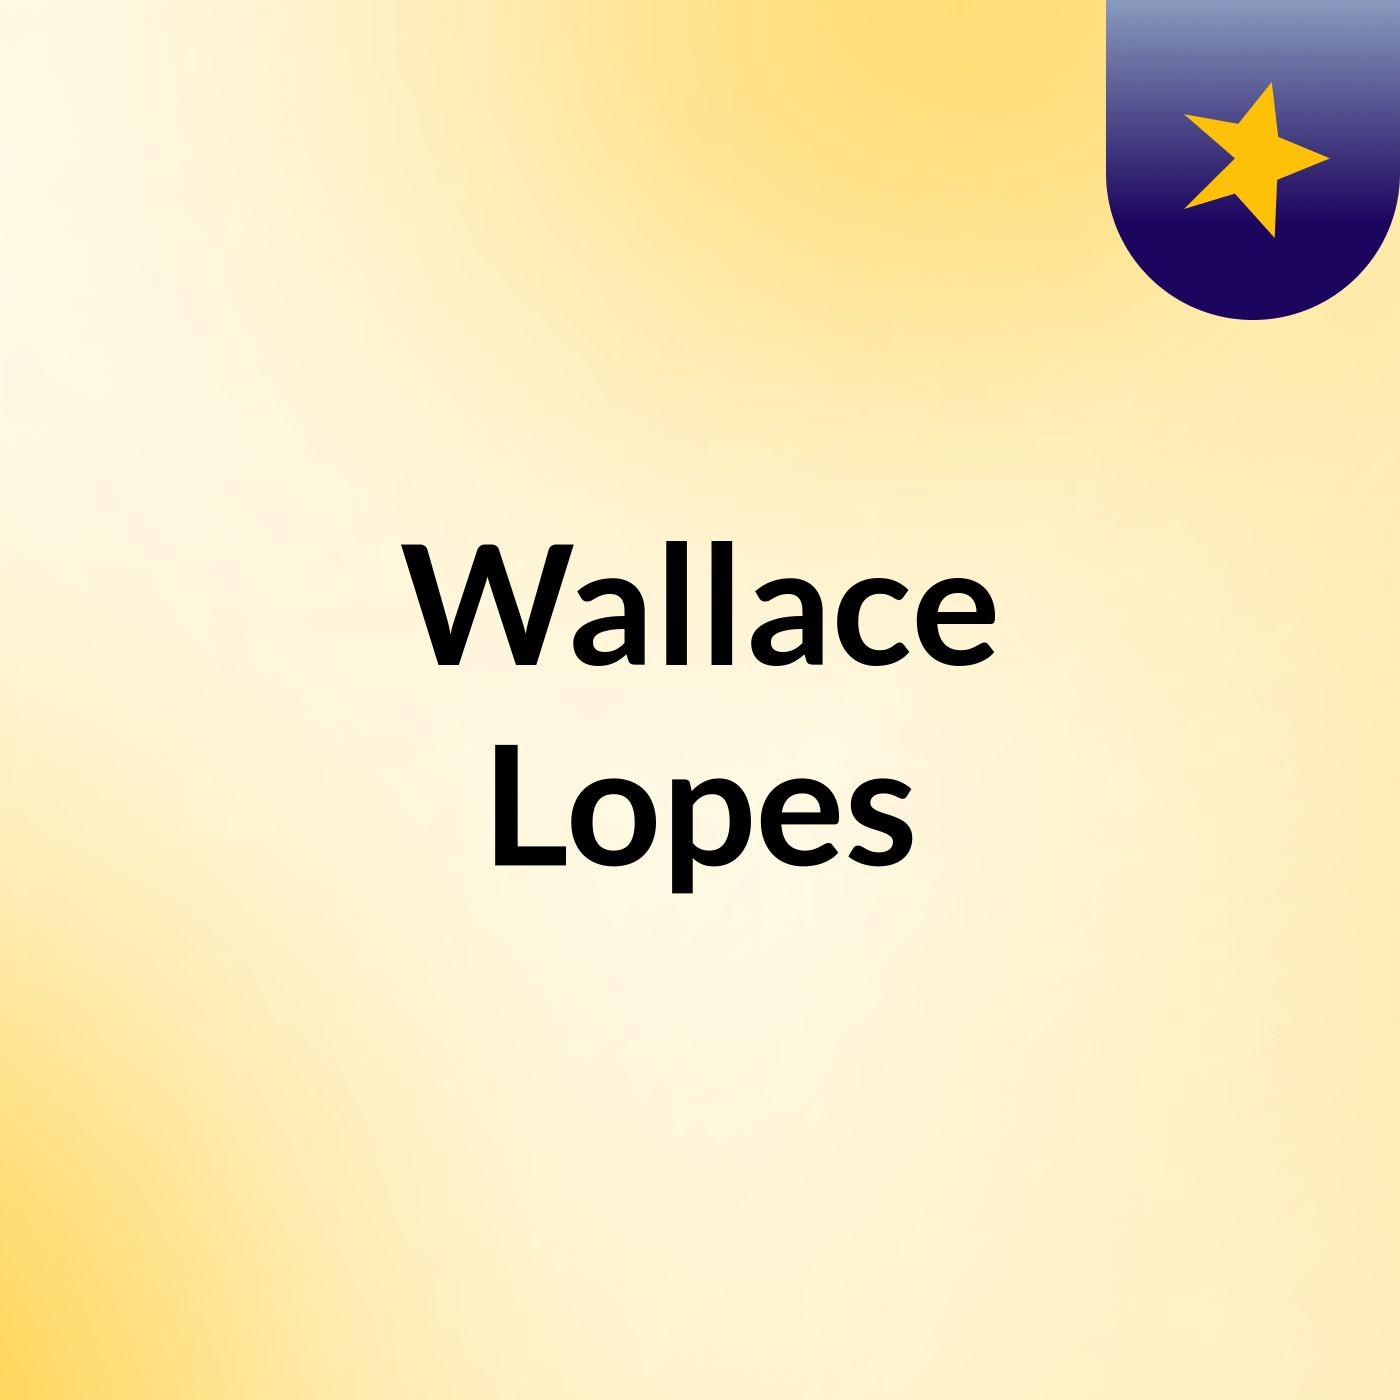 Wallace Lopes